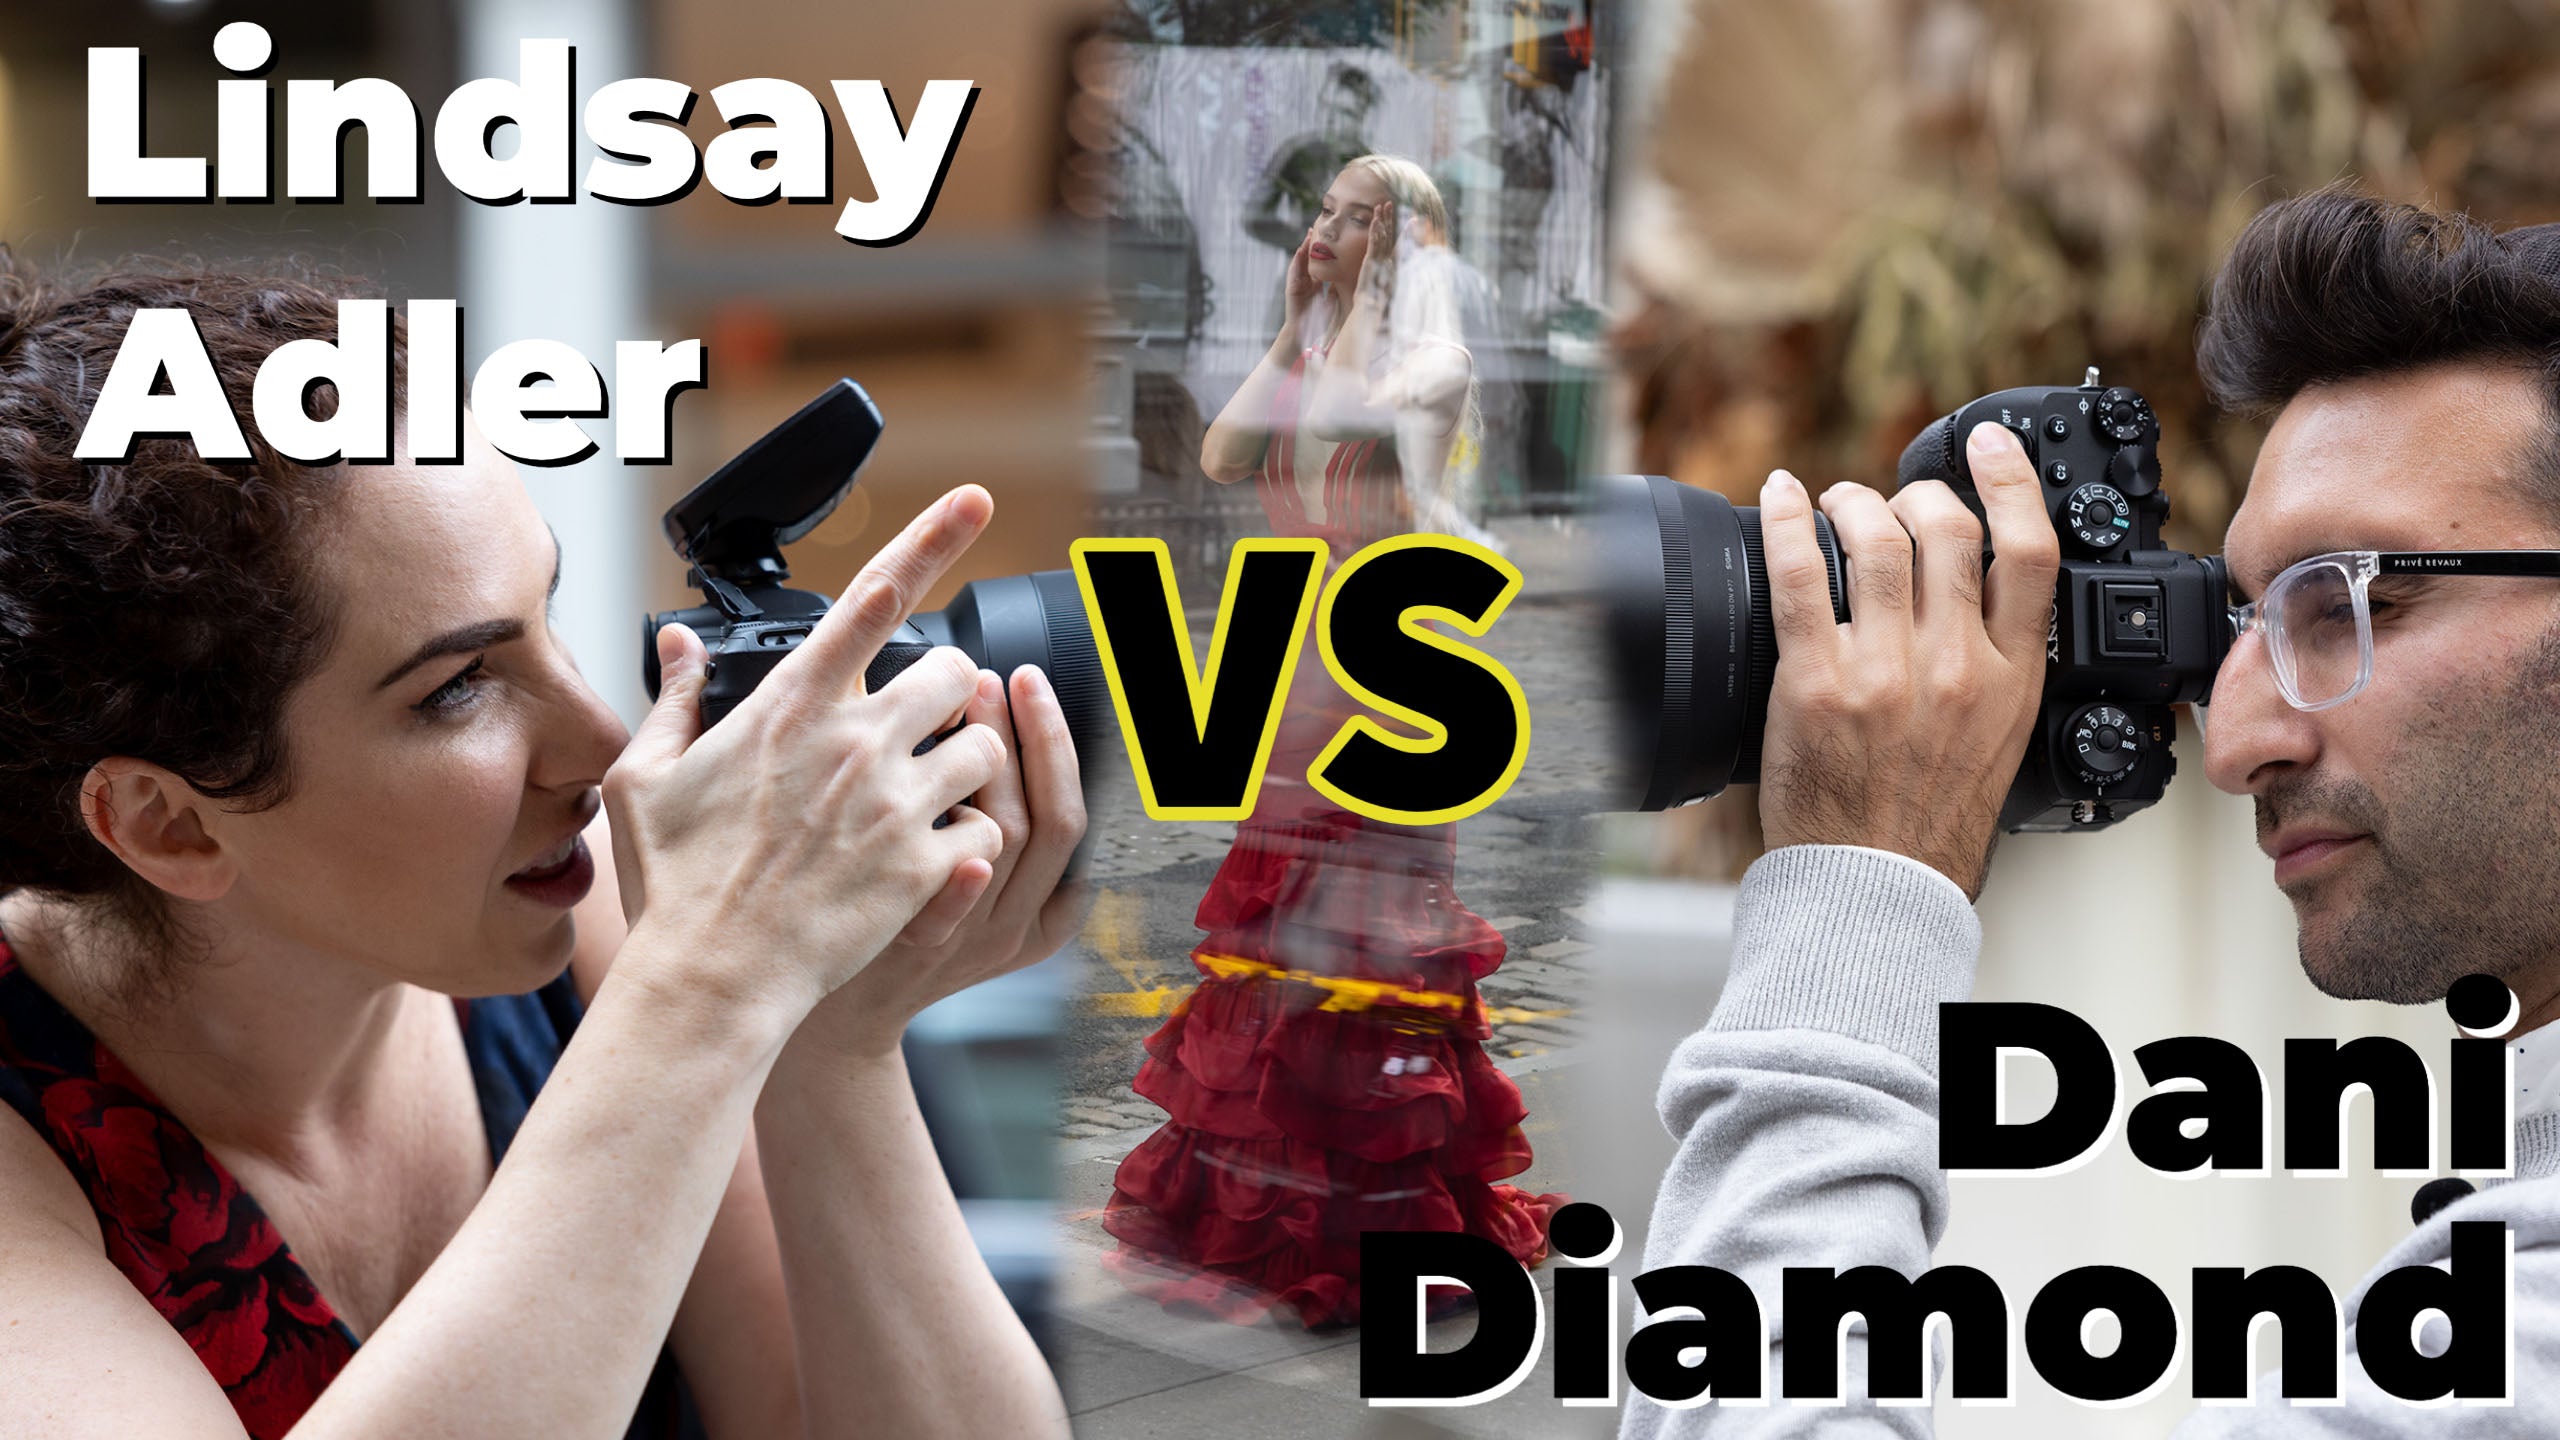 Photography Wars: Lindsay Adler VS Dani Diamond